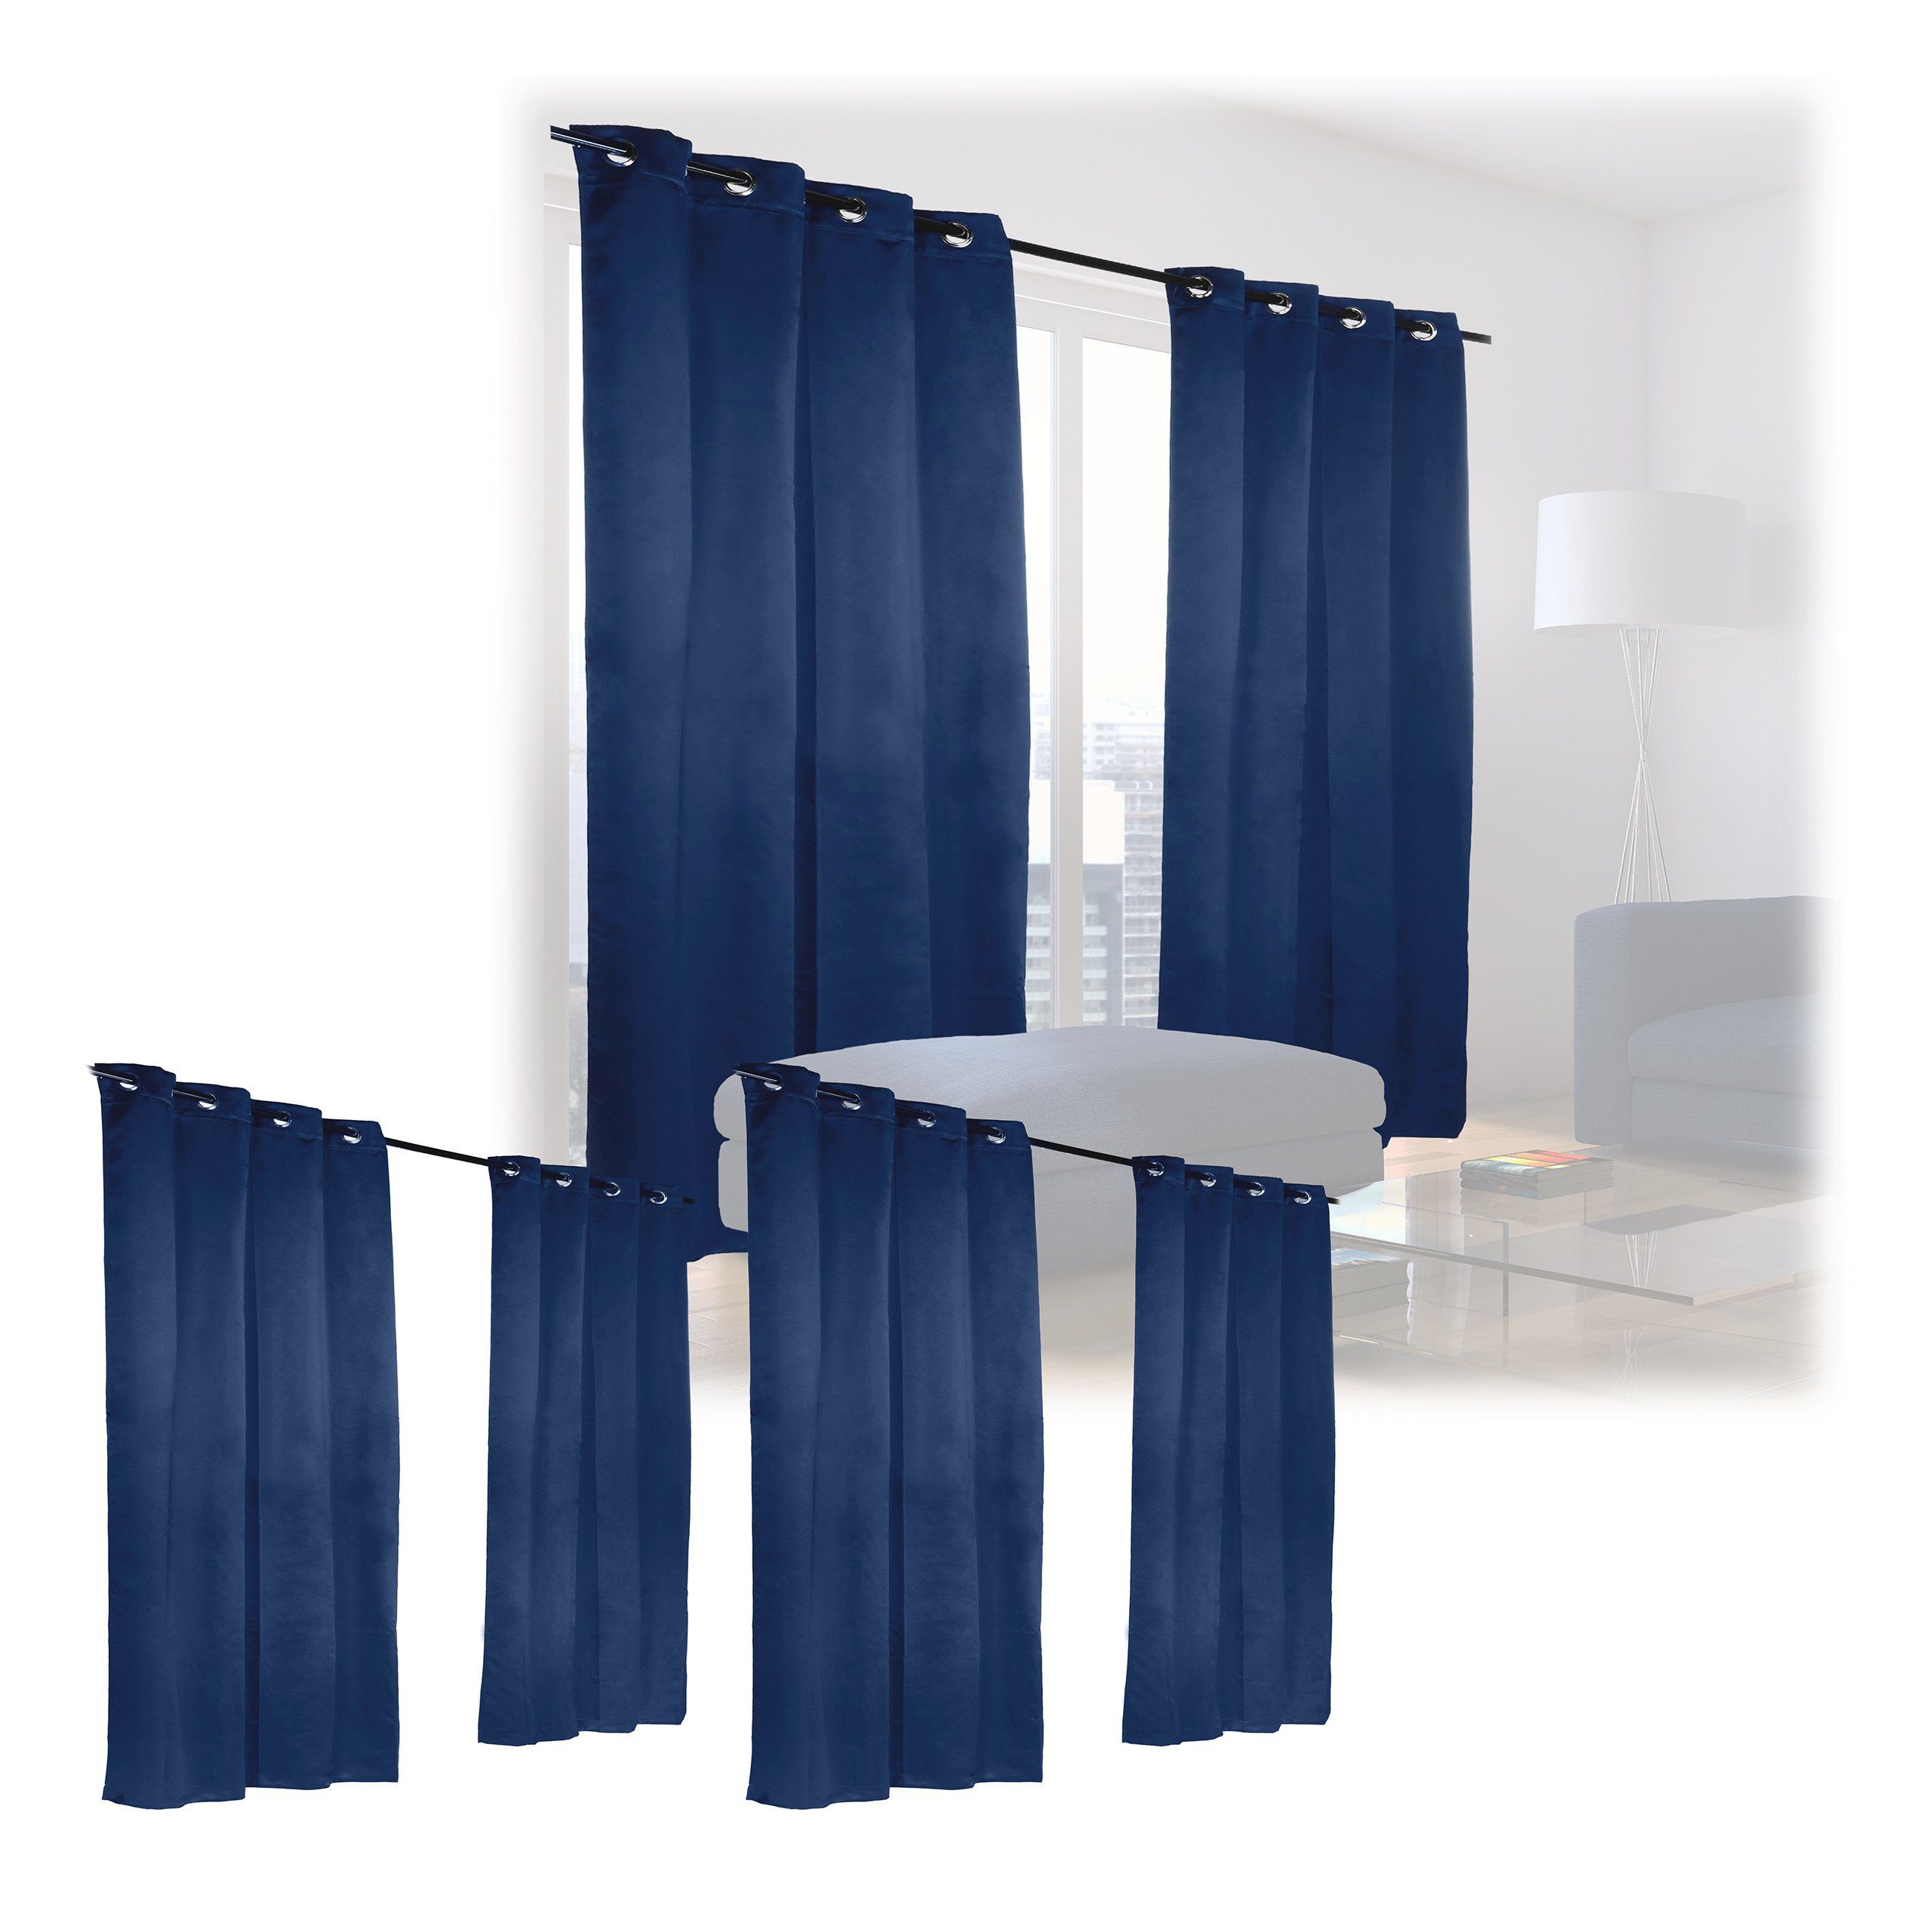 245 relaxdays x 135 cm, Vorhang 6 x Vorhang blau